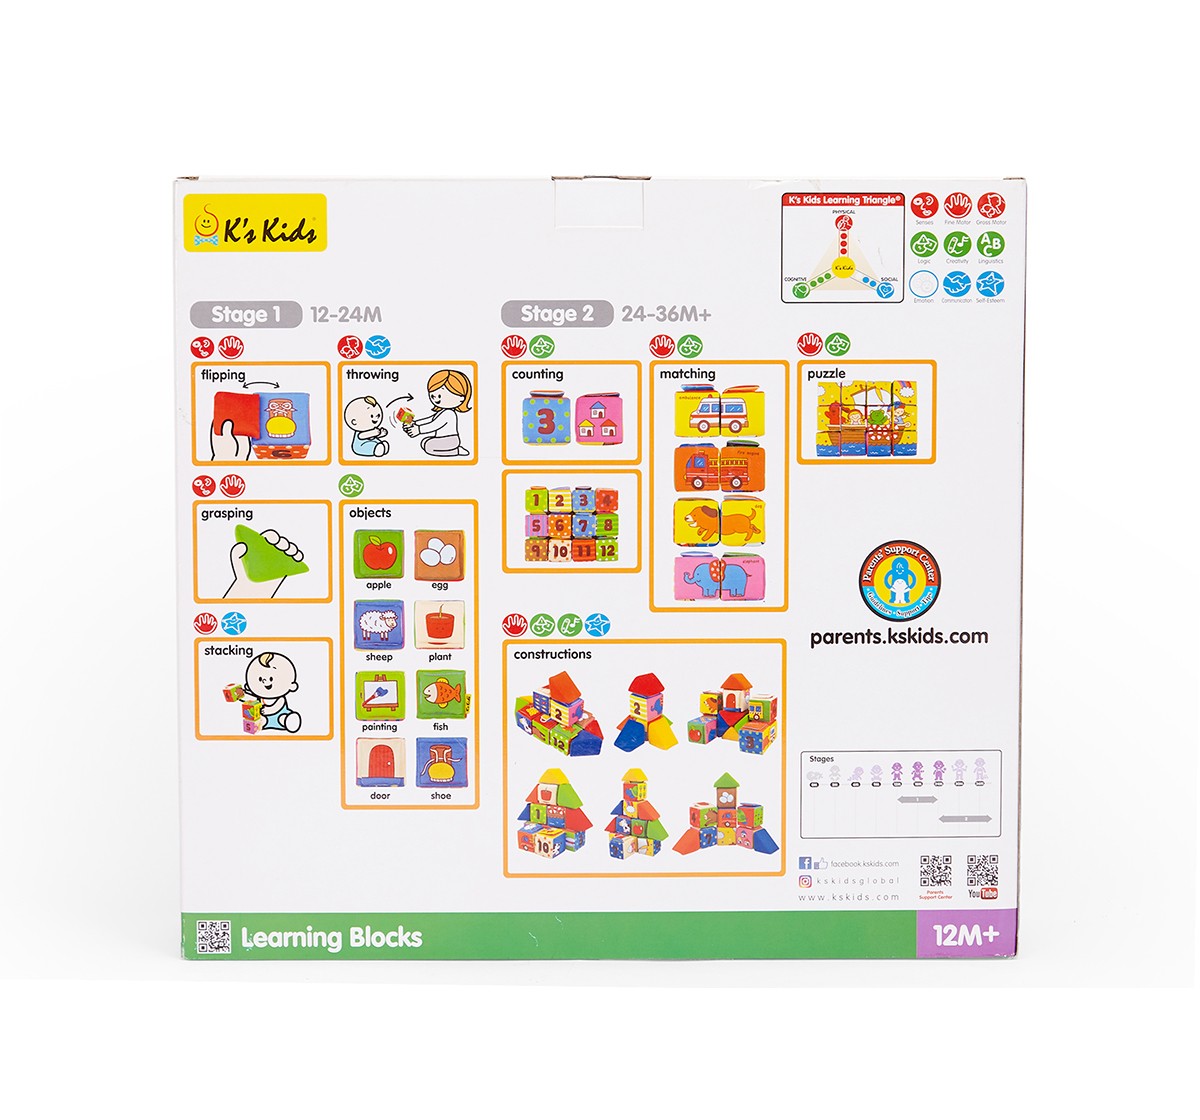 K'S Kids Learning Blocks - 17 Blocks Activity Toys for Kids age 12M+ 